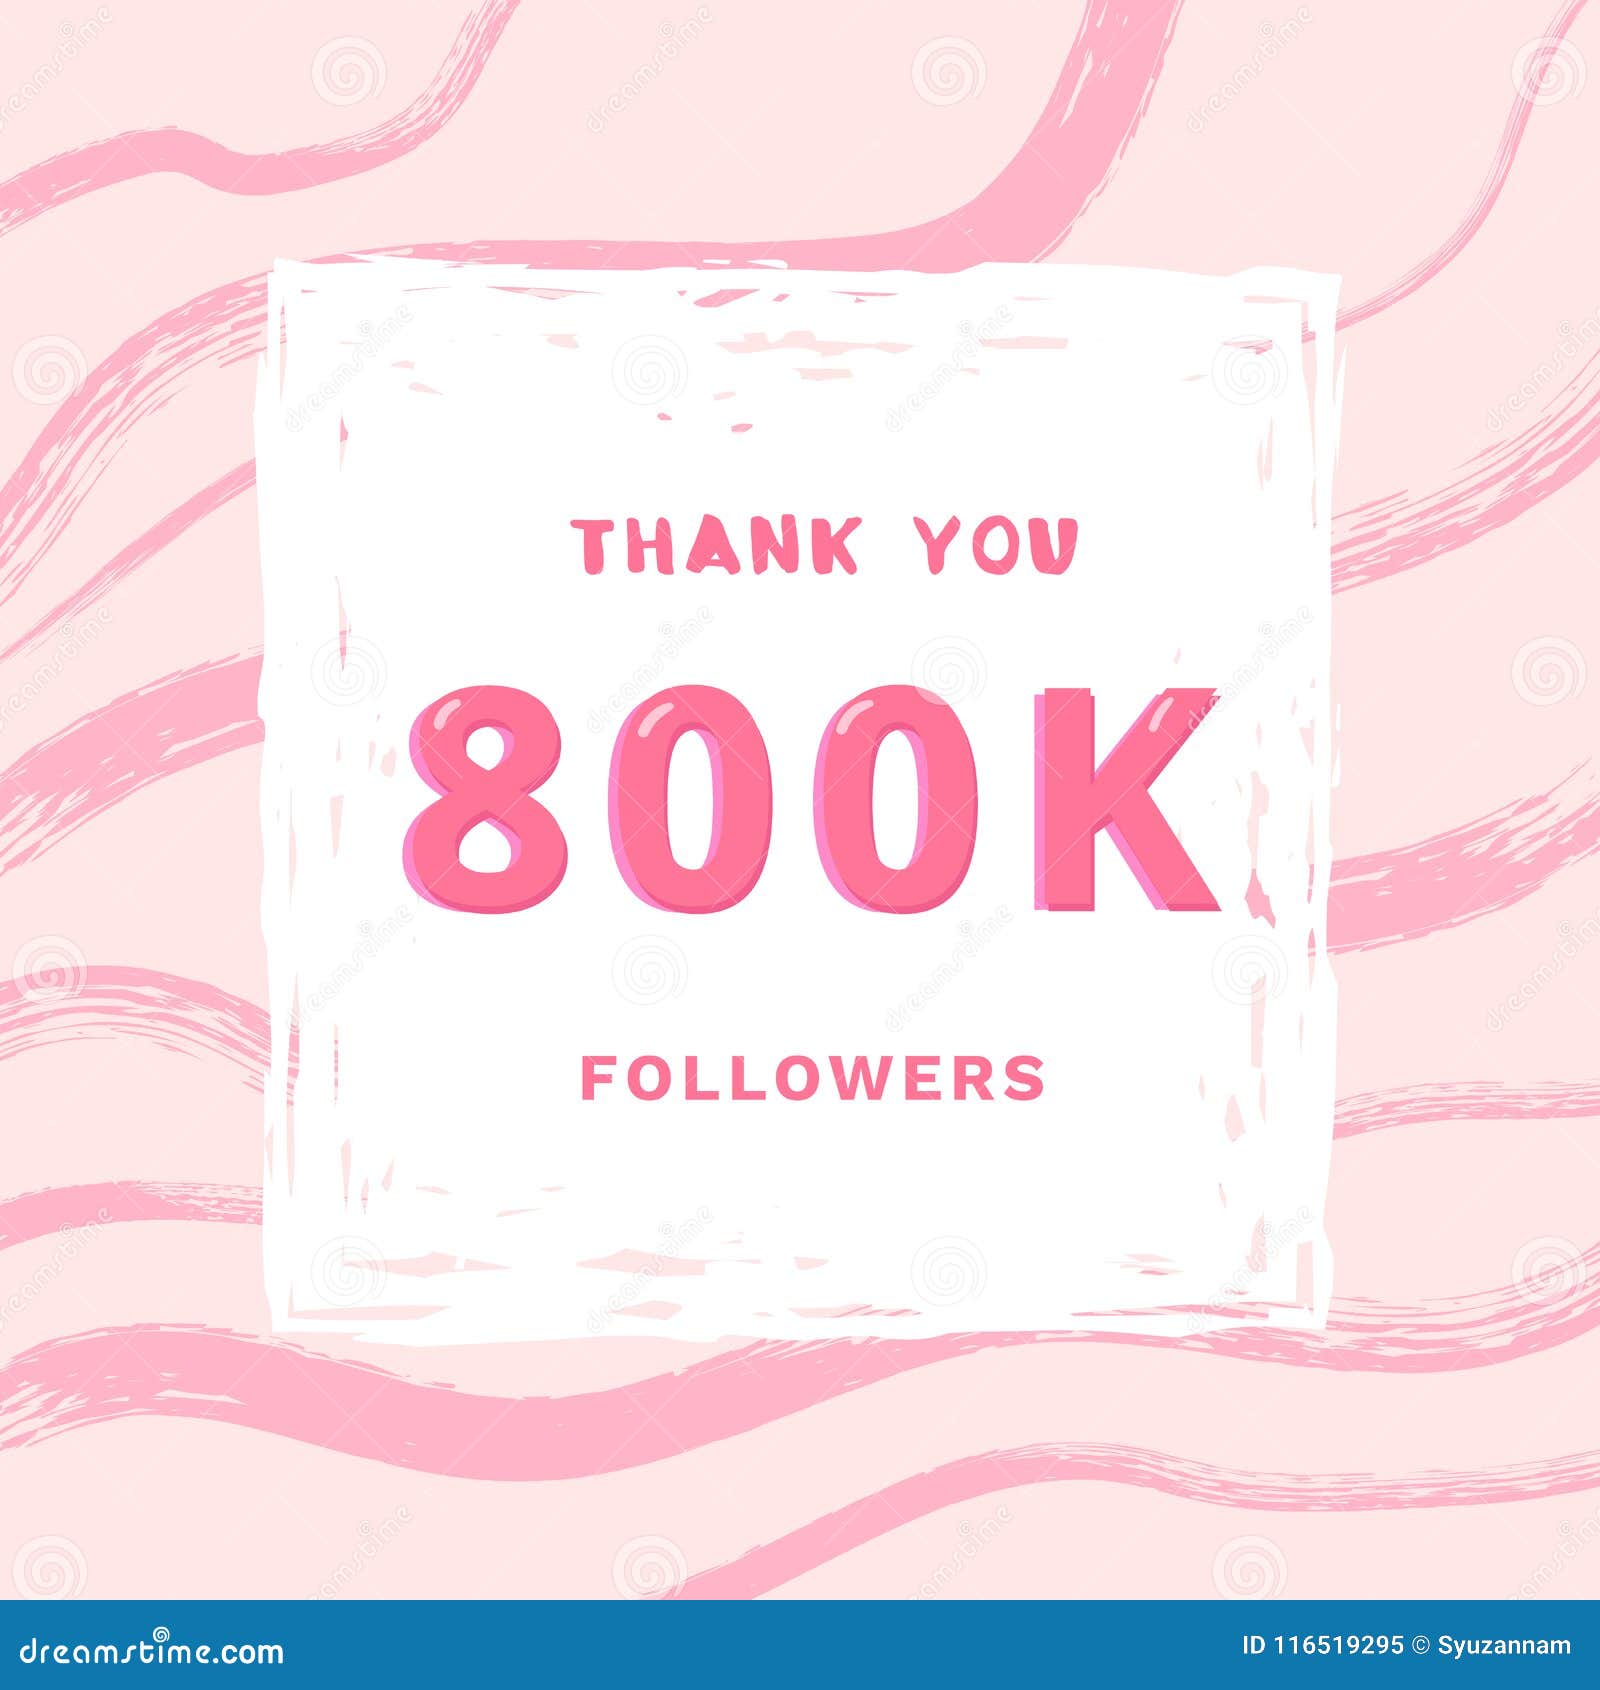 800K Followers Thank You. 